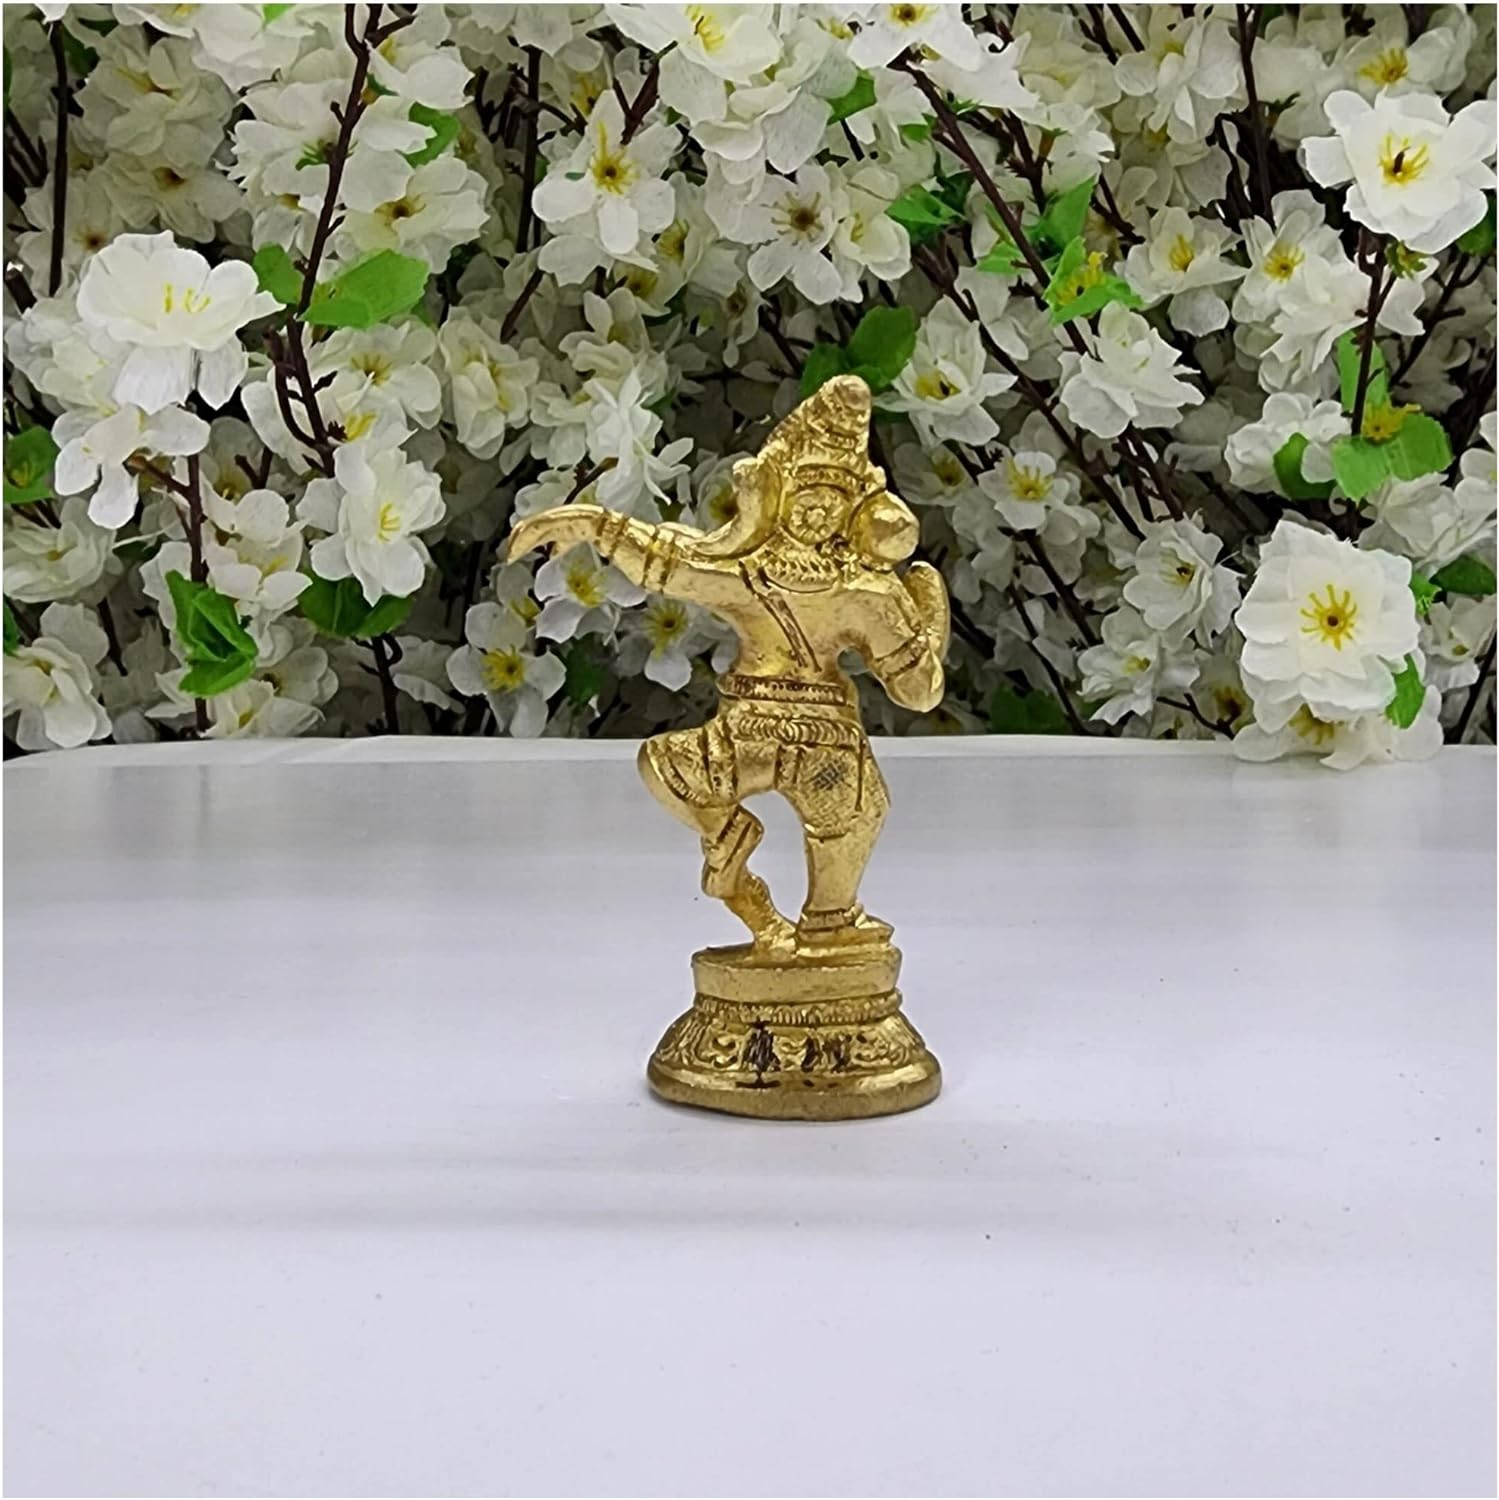 AtoZ India Cart Dancing Ganesha Statue in Brass Small Ganesha Idol Lord Ganesha Sculpture Hindu Good Luck God Ganesha Figurine Indian Temple Mandir Decor Ganesha Murti Elephant Headed God Altar Decor